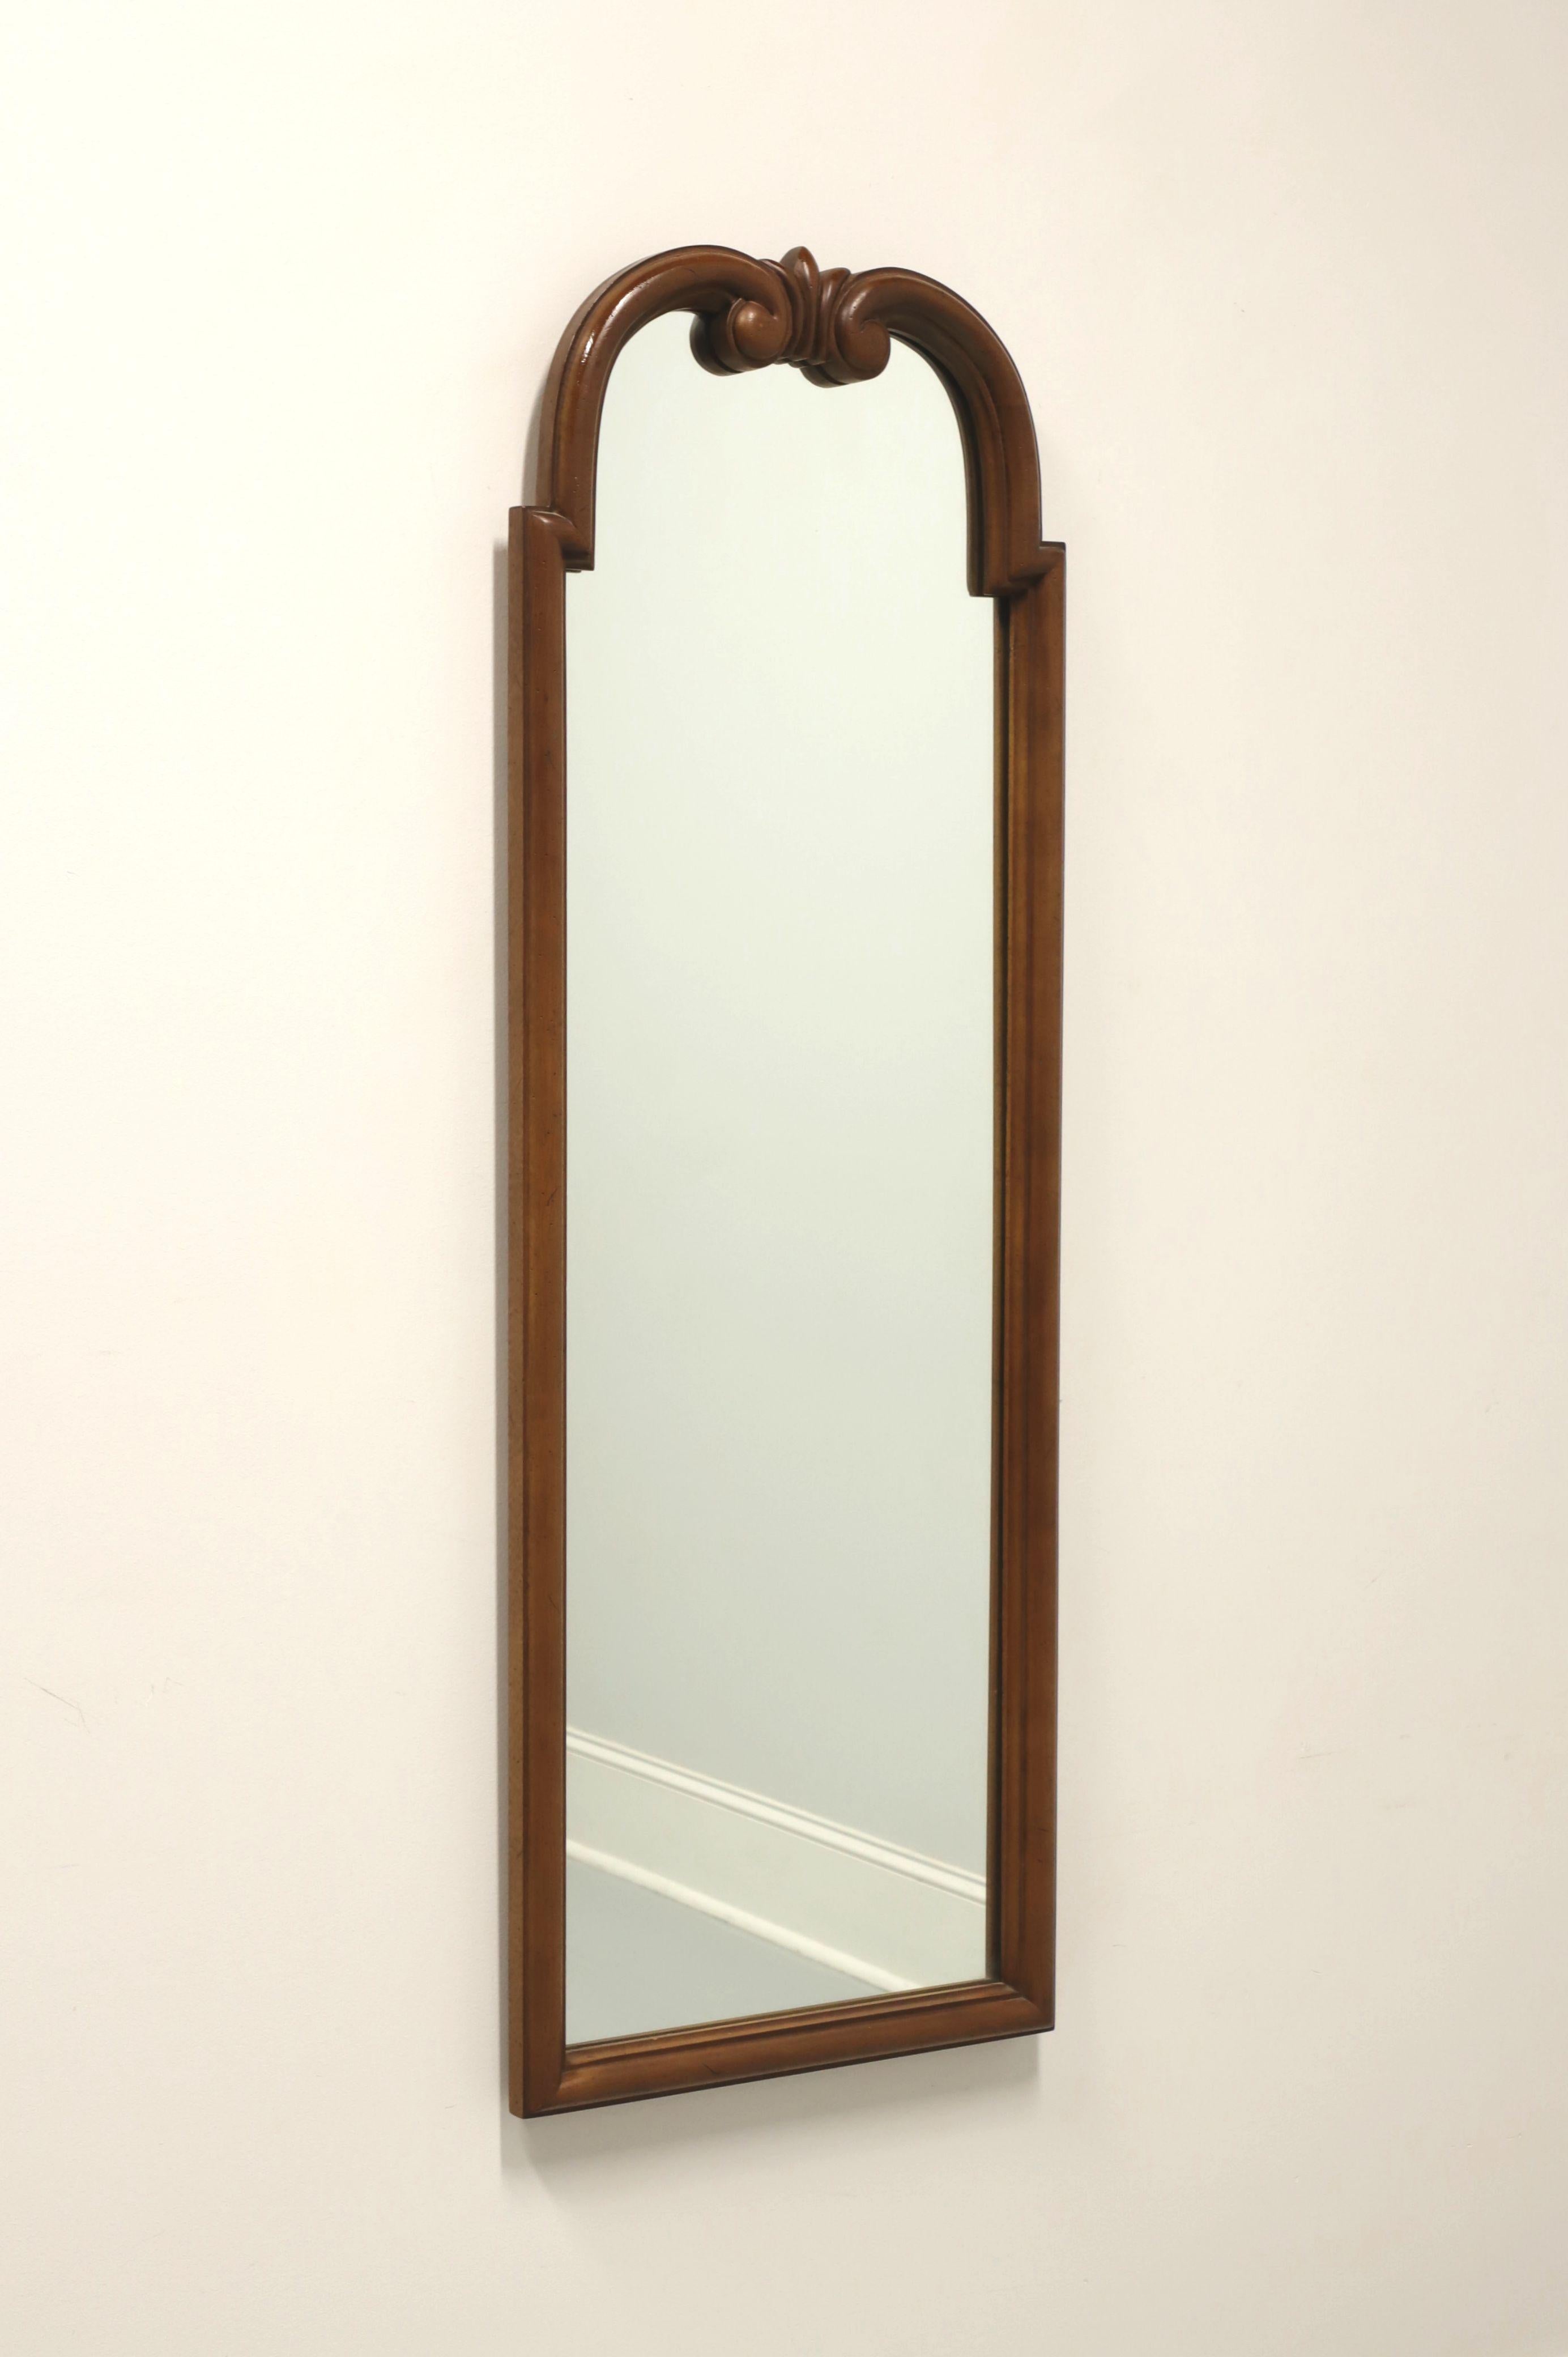 TOMLINSON 1960's Carved Walnut Scroll Regency Style Wall Mirror - B For Sale 2